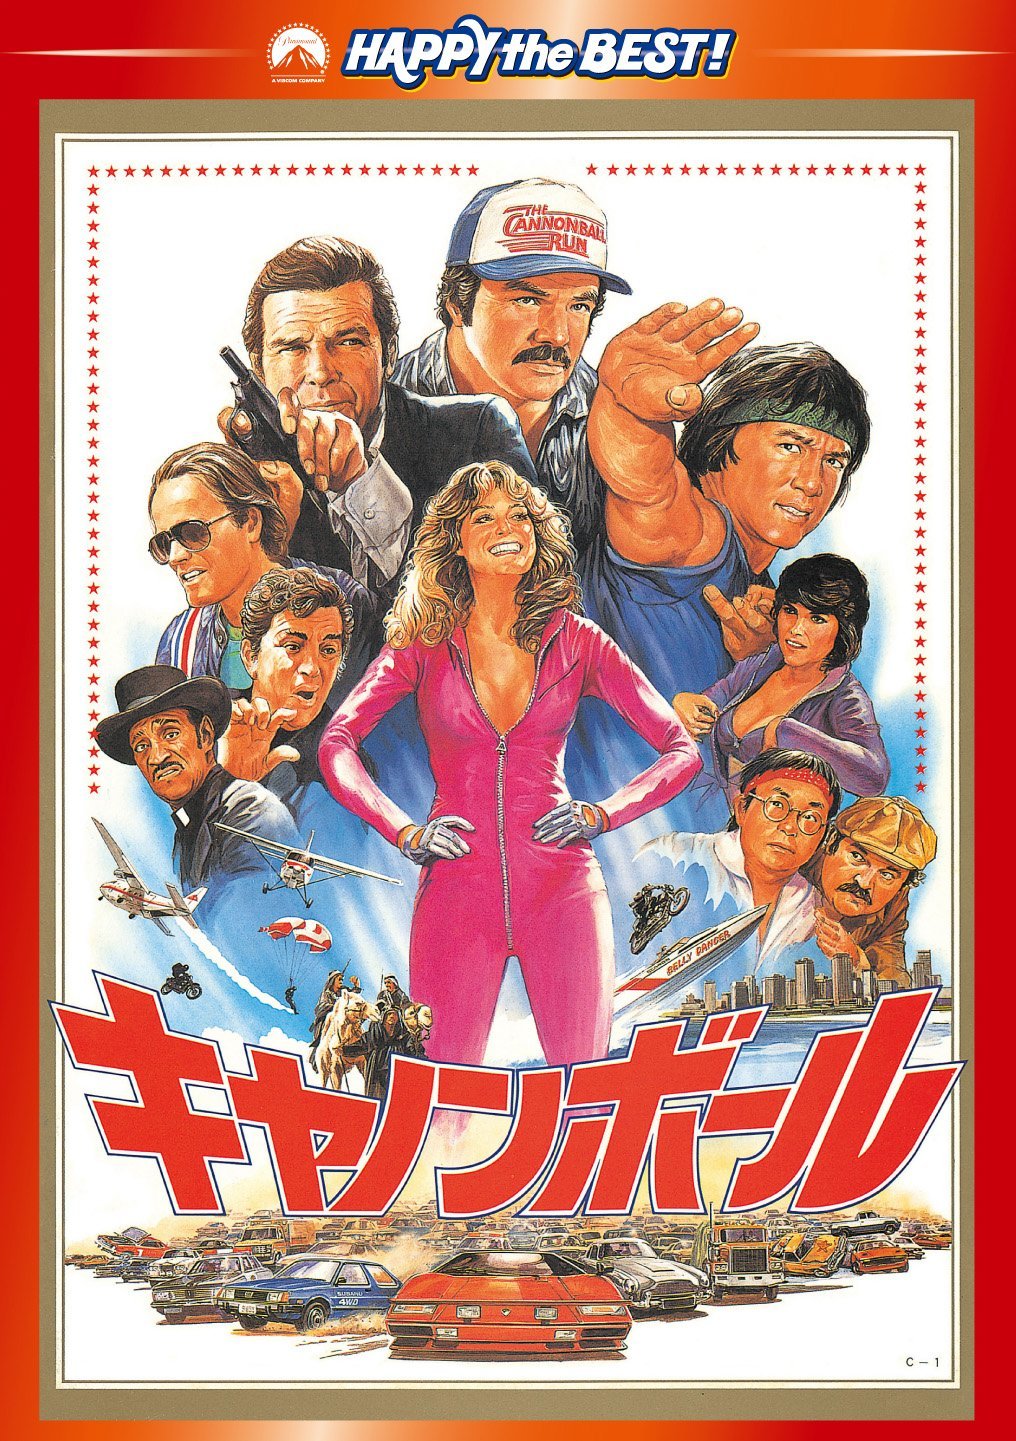 YESASIA: The Cannonball Run (1981) (Blu-ray) (Hong Kong Version) Blu-ray -  Jackie Chan, Burt Reynolds, Kam & Ronson Enterprises Co Ltd - Western /  World Movies & Videos - Free Shipping